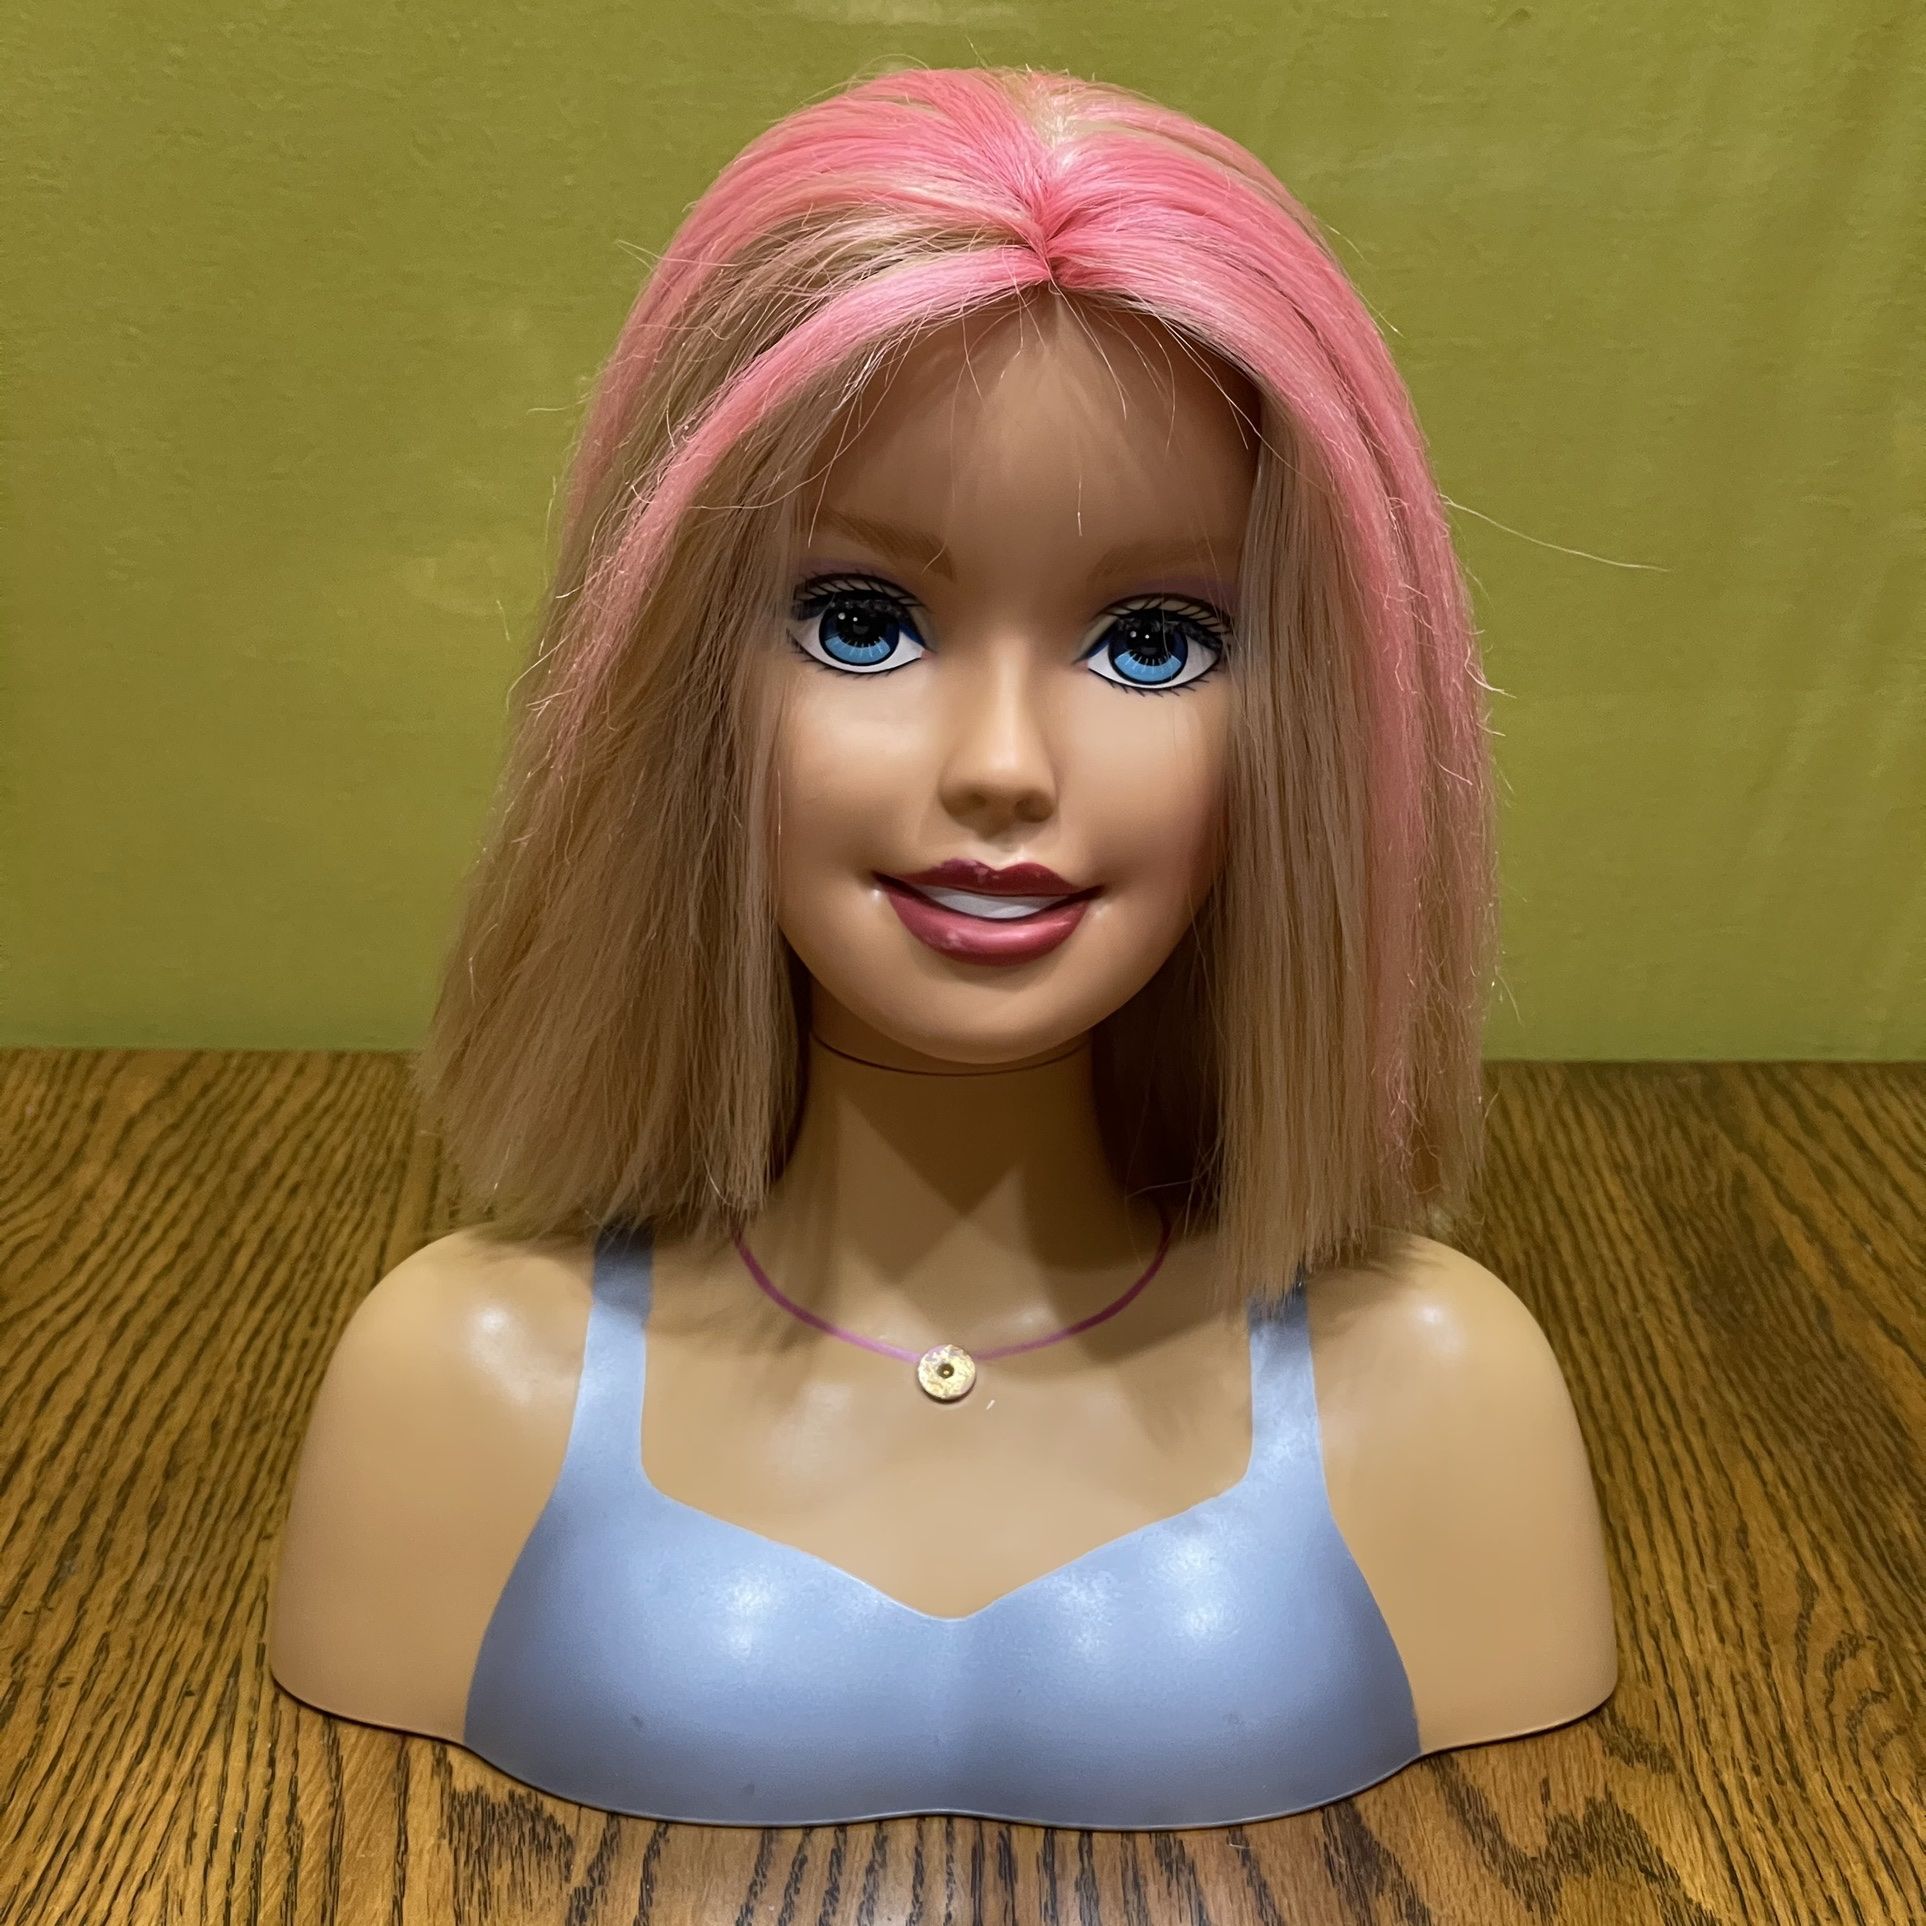 Very Rare 1998-2002 mattel barbie Hair Style Hairdresser head Bust Toy Pink Highlights